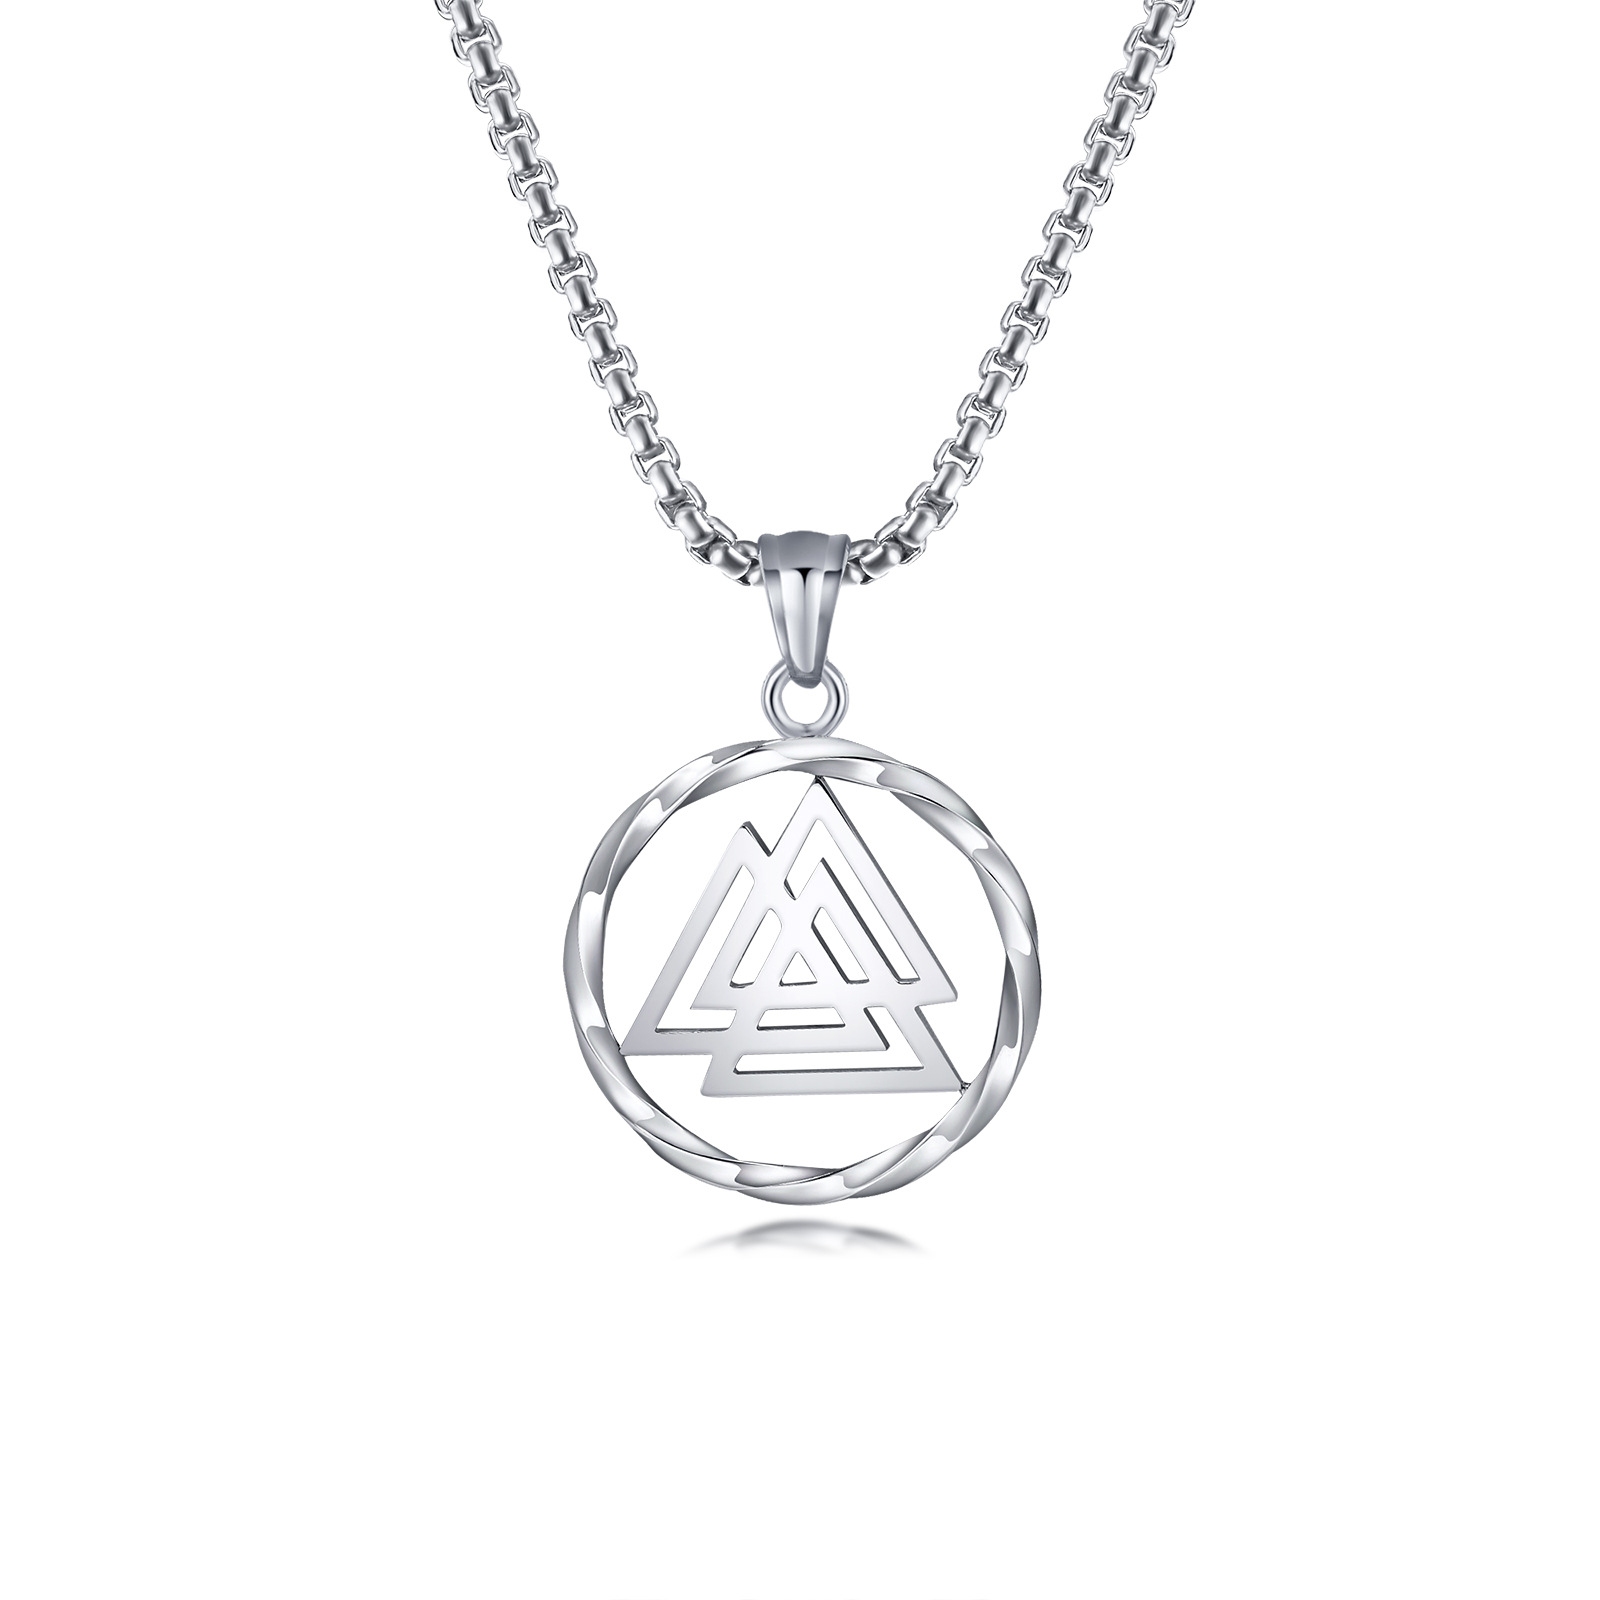 2:Viking symbol pendant with chain